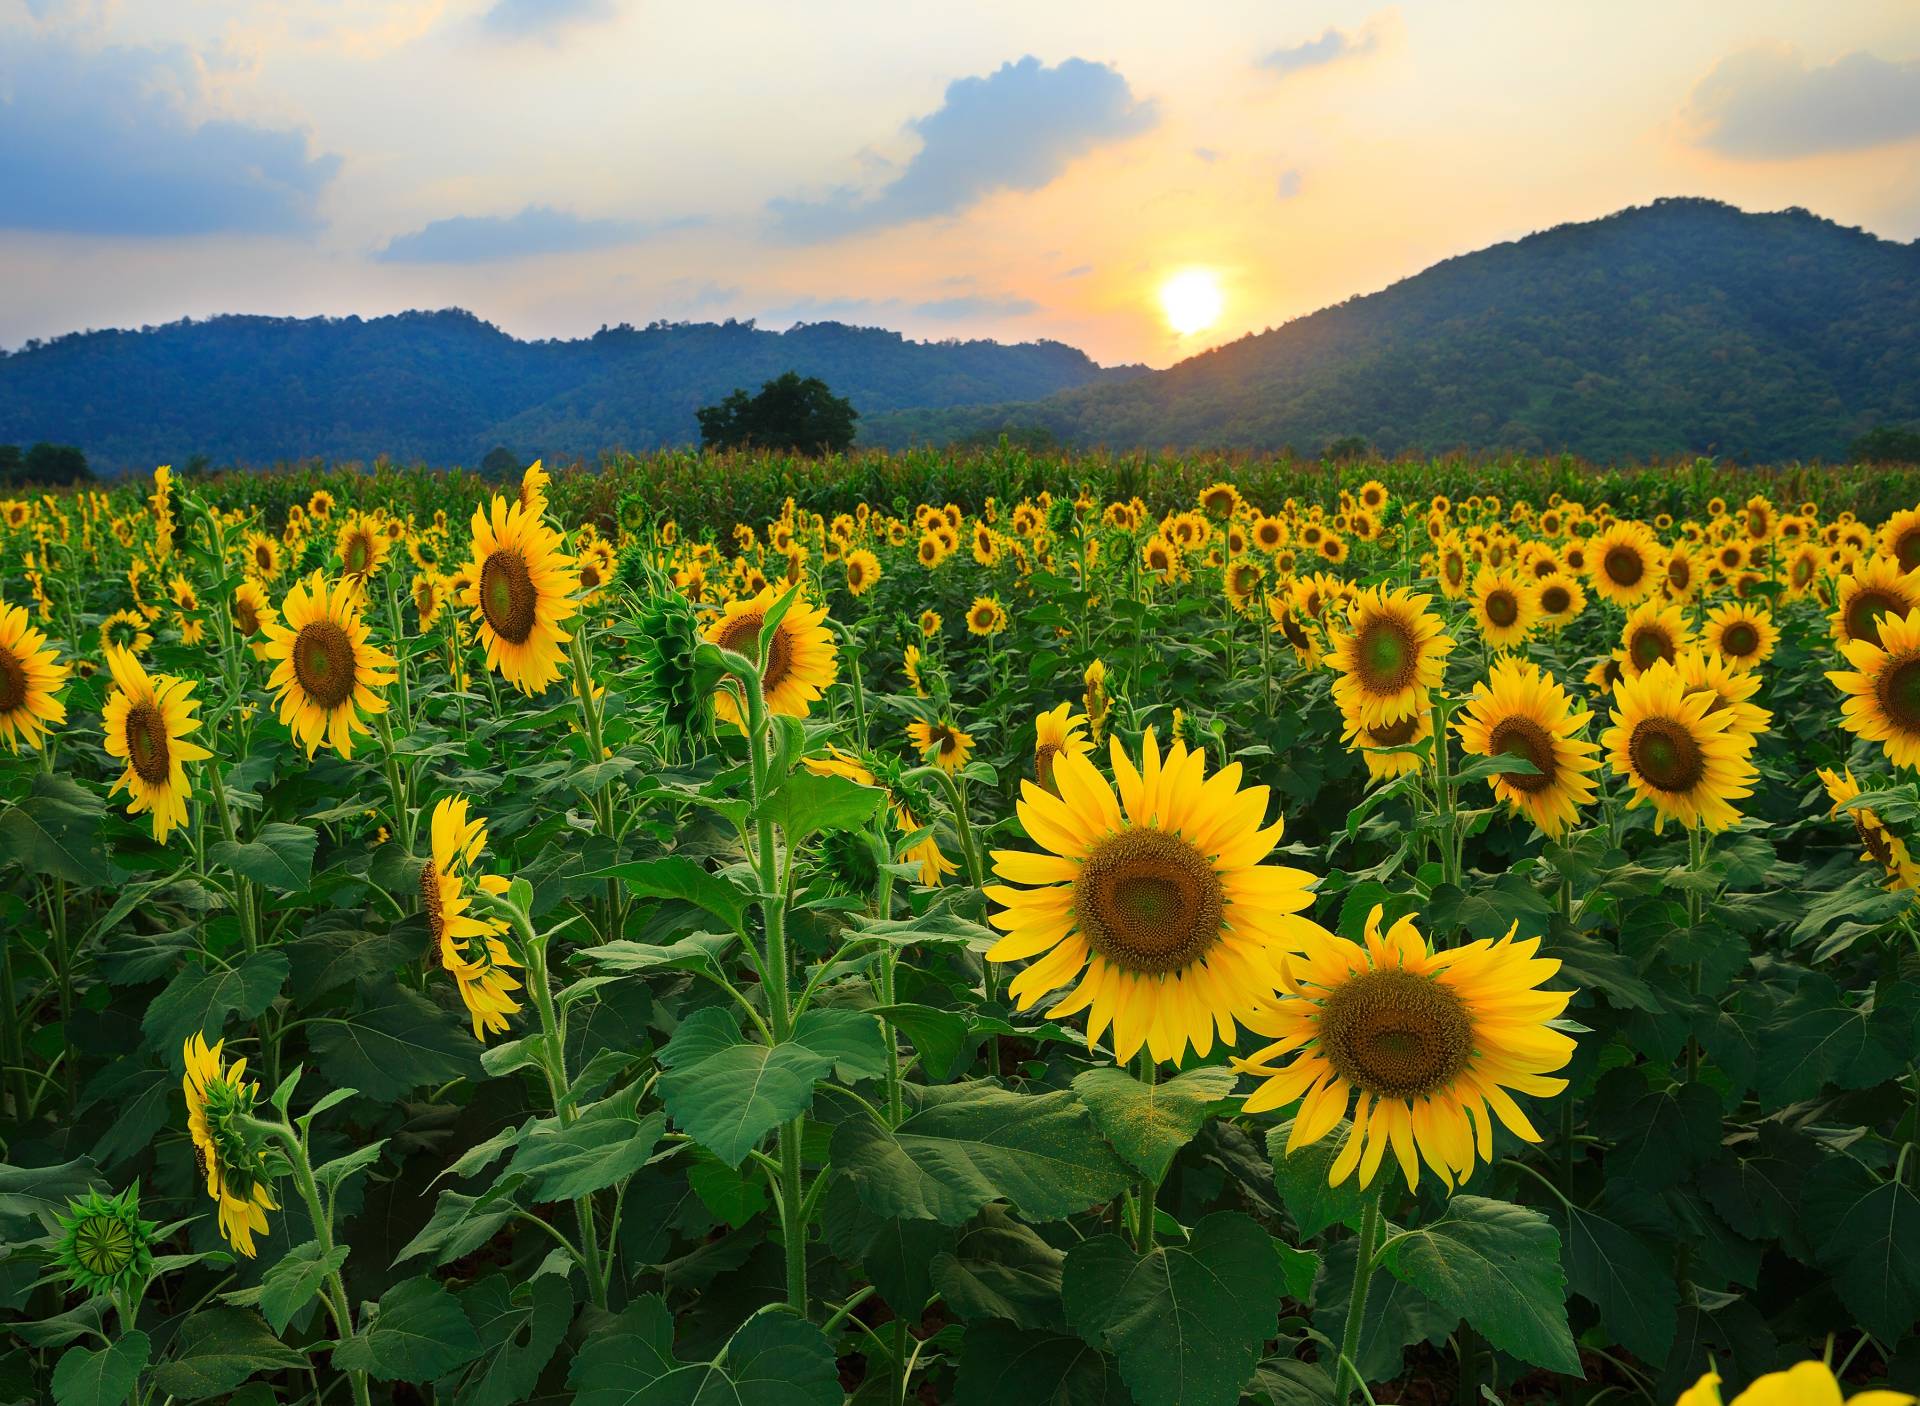 Papermoon Fototapete "Sunflower Field" von Papermoon